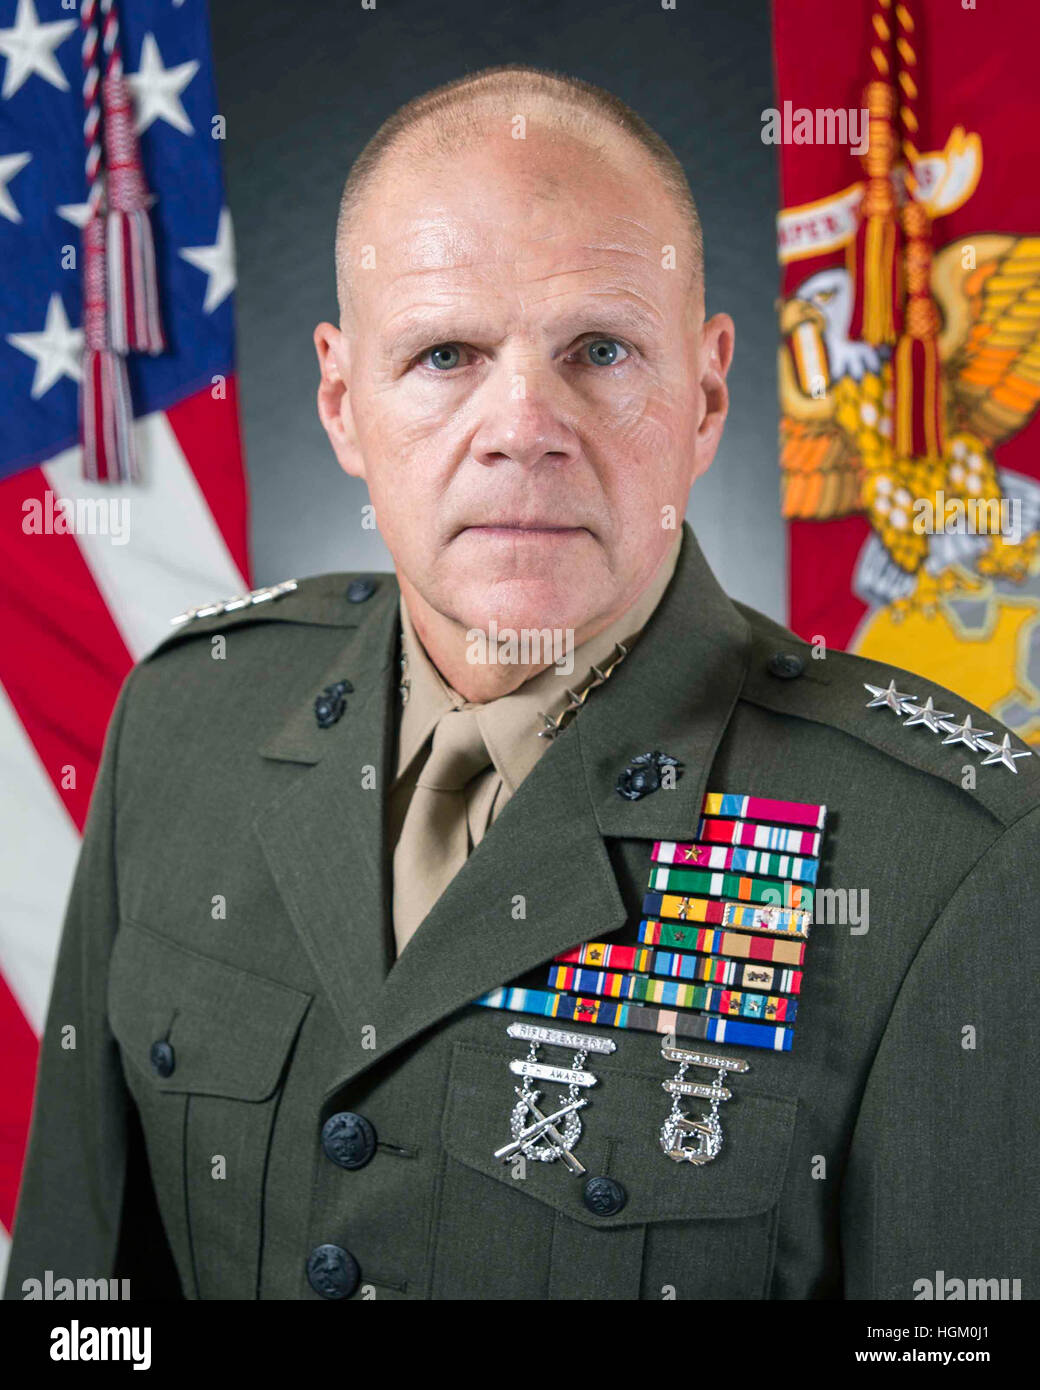 ROBERT B. NELLER als die 37. Commandant of the Marine Corps. Foto: US Marine Corps/Sgt Gabriela Garcia/2015 Stockfoto